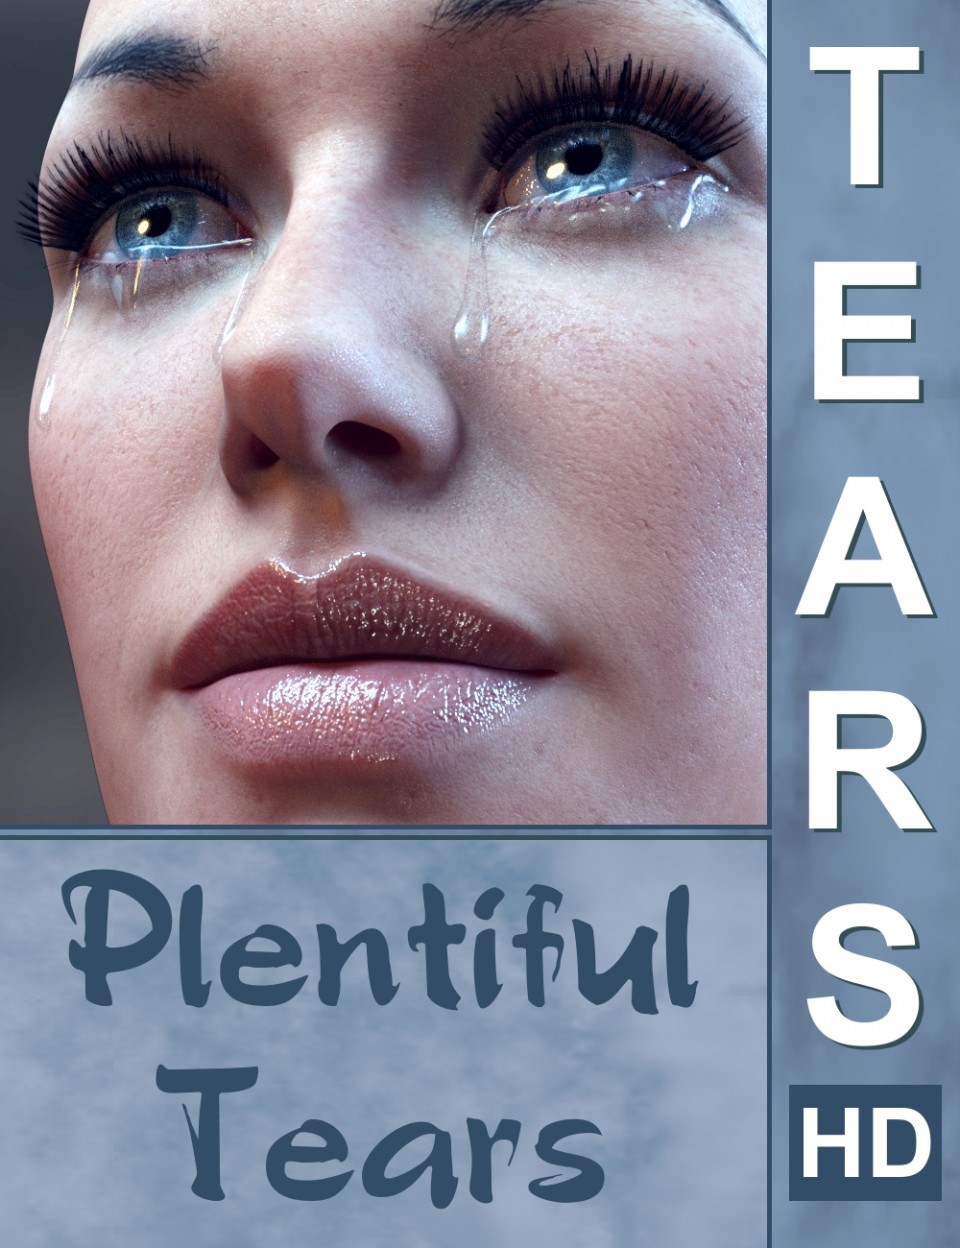 Tears HD Plentiful Tears_DAZ3D下载站